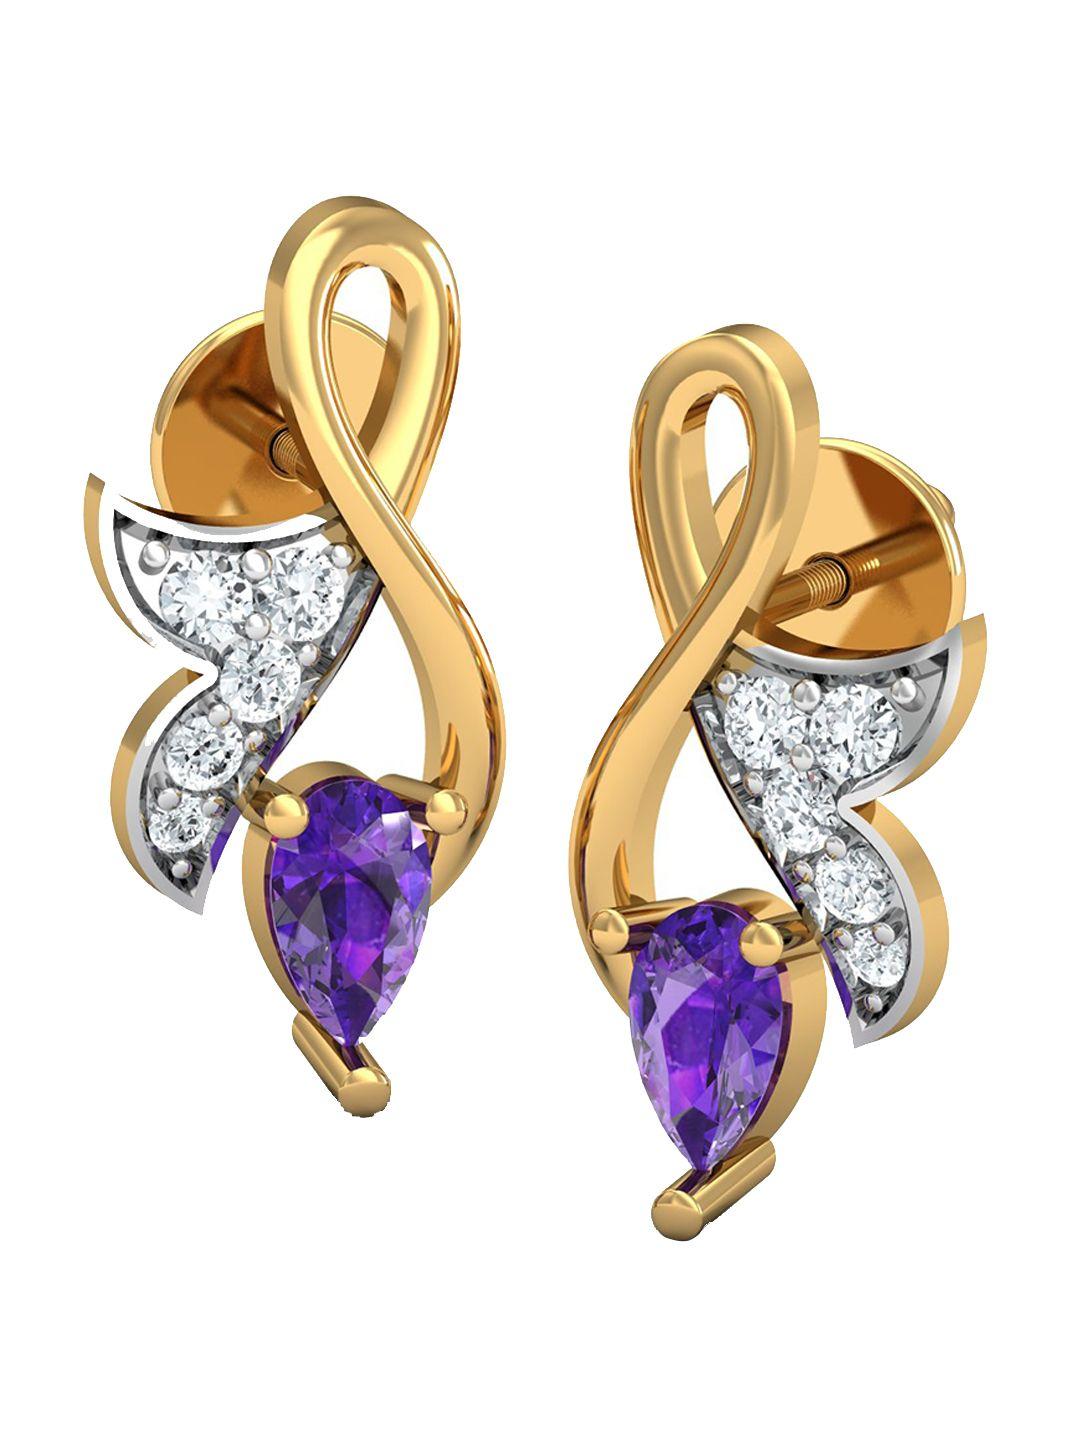 kuberbox regal 18kt gold diamond amethyst studded stud earrings-2.89gm